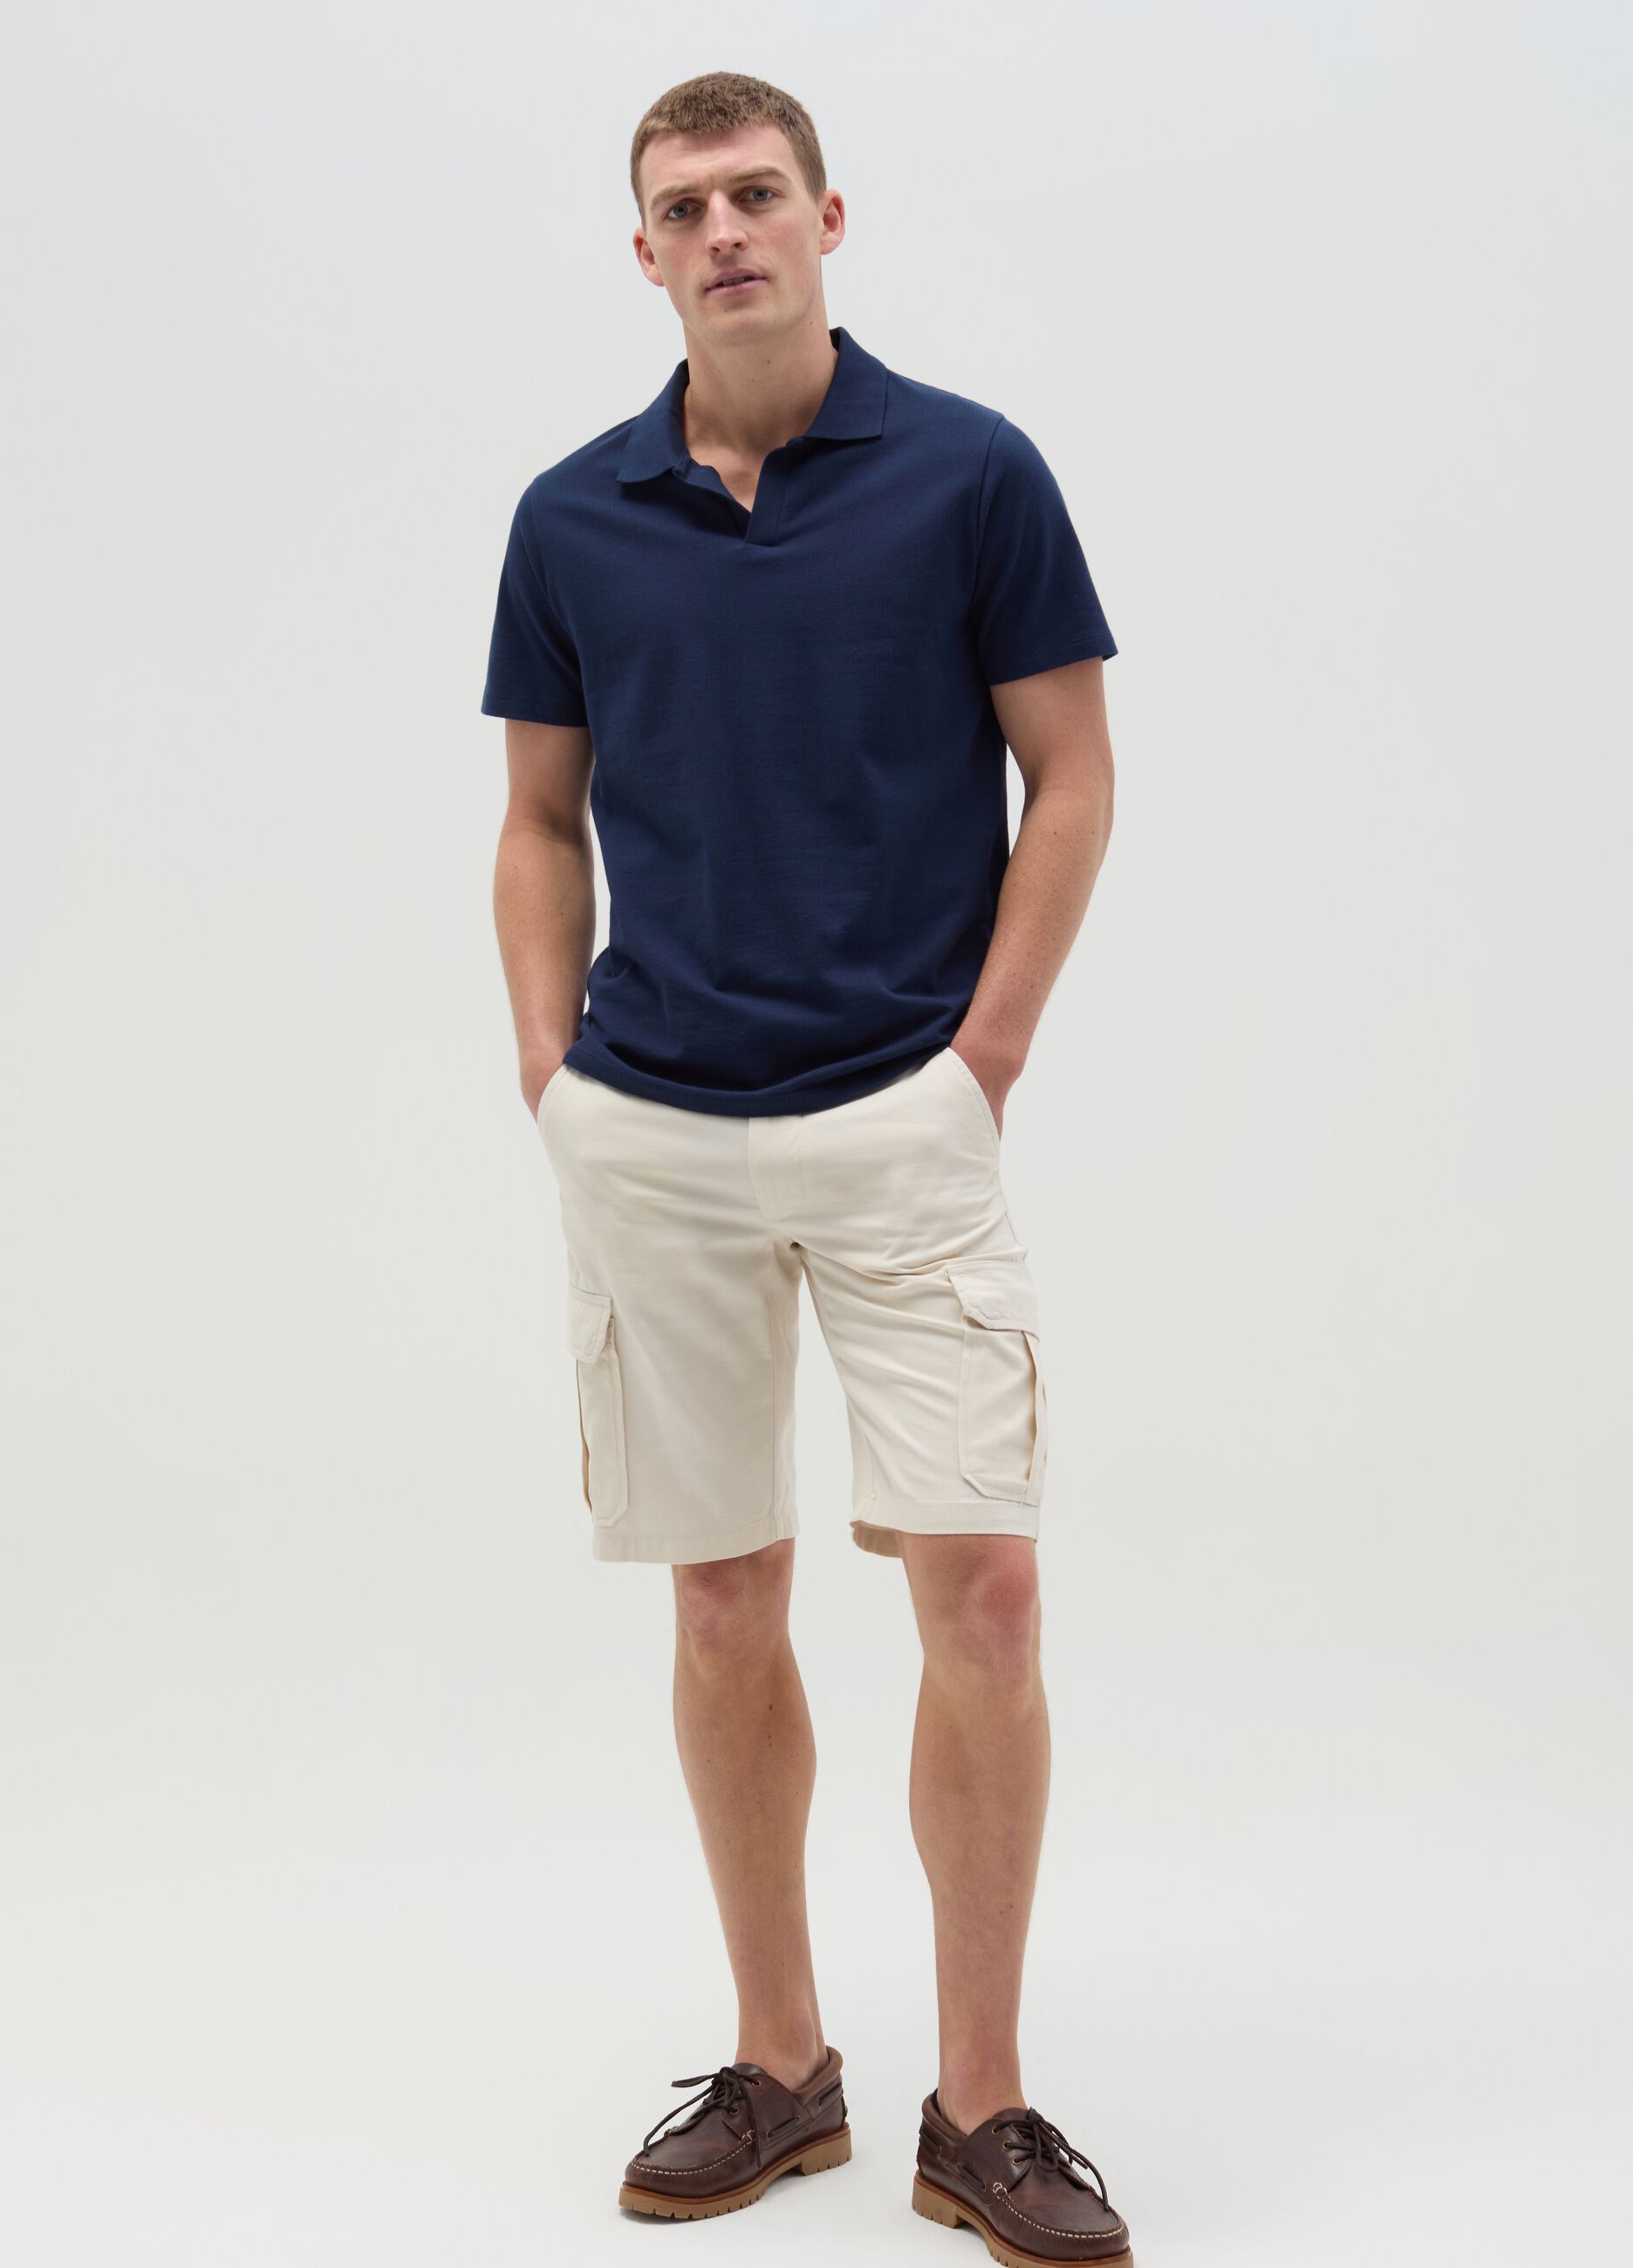 Cargo Bermuda shorts in cotton and linen